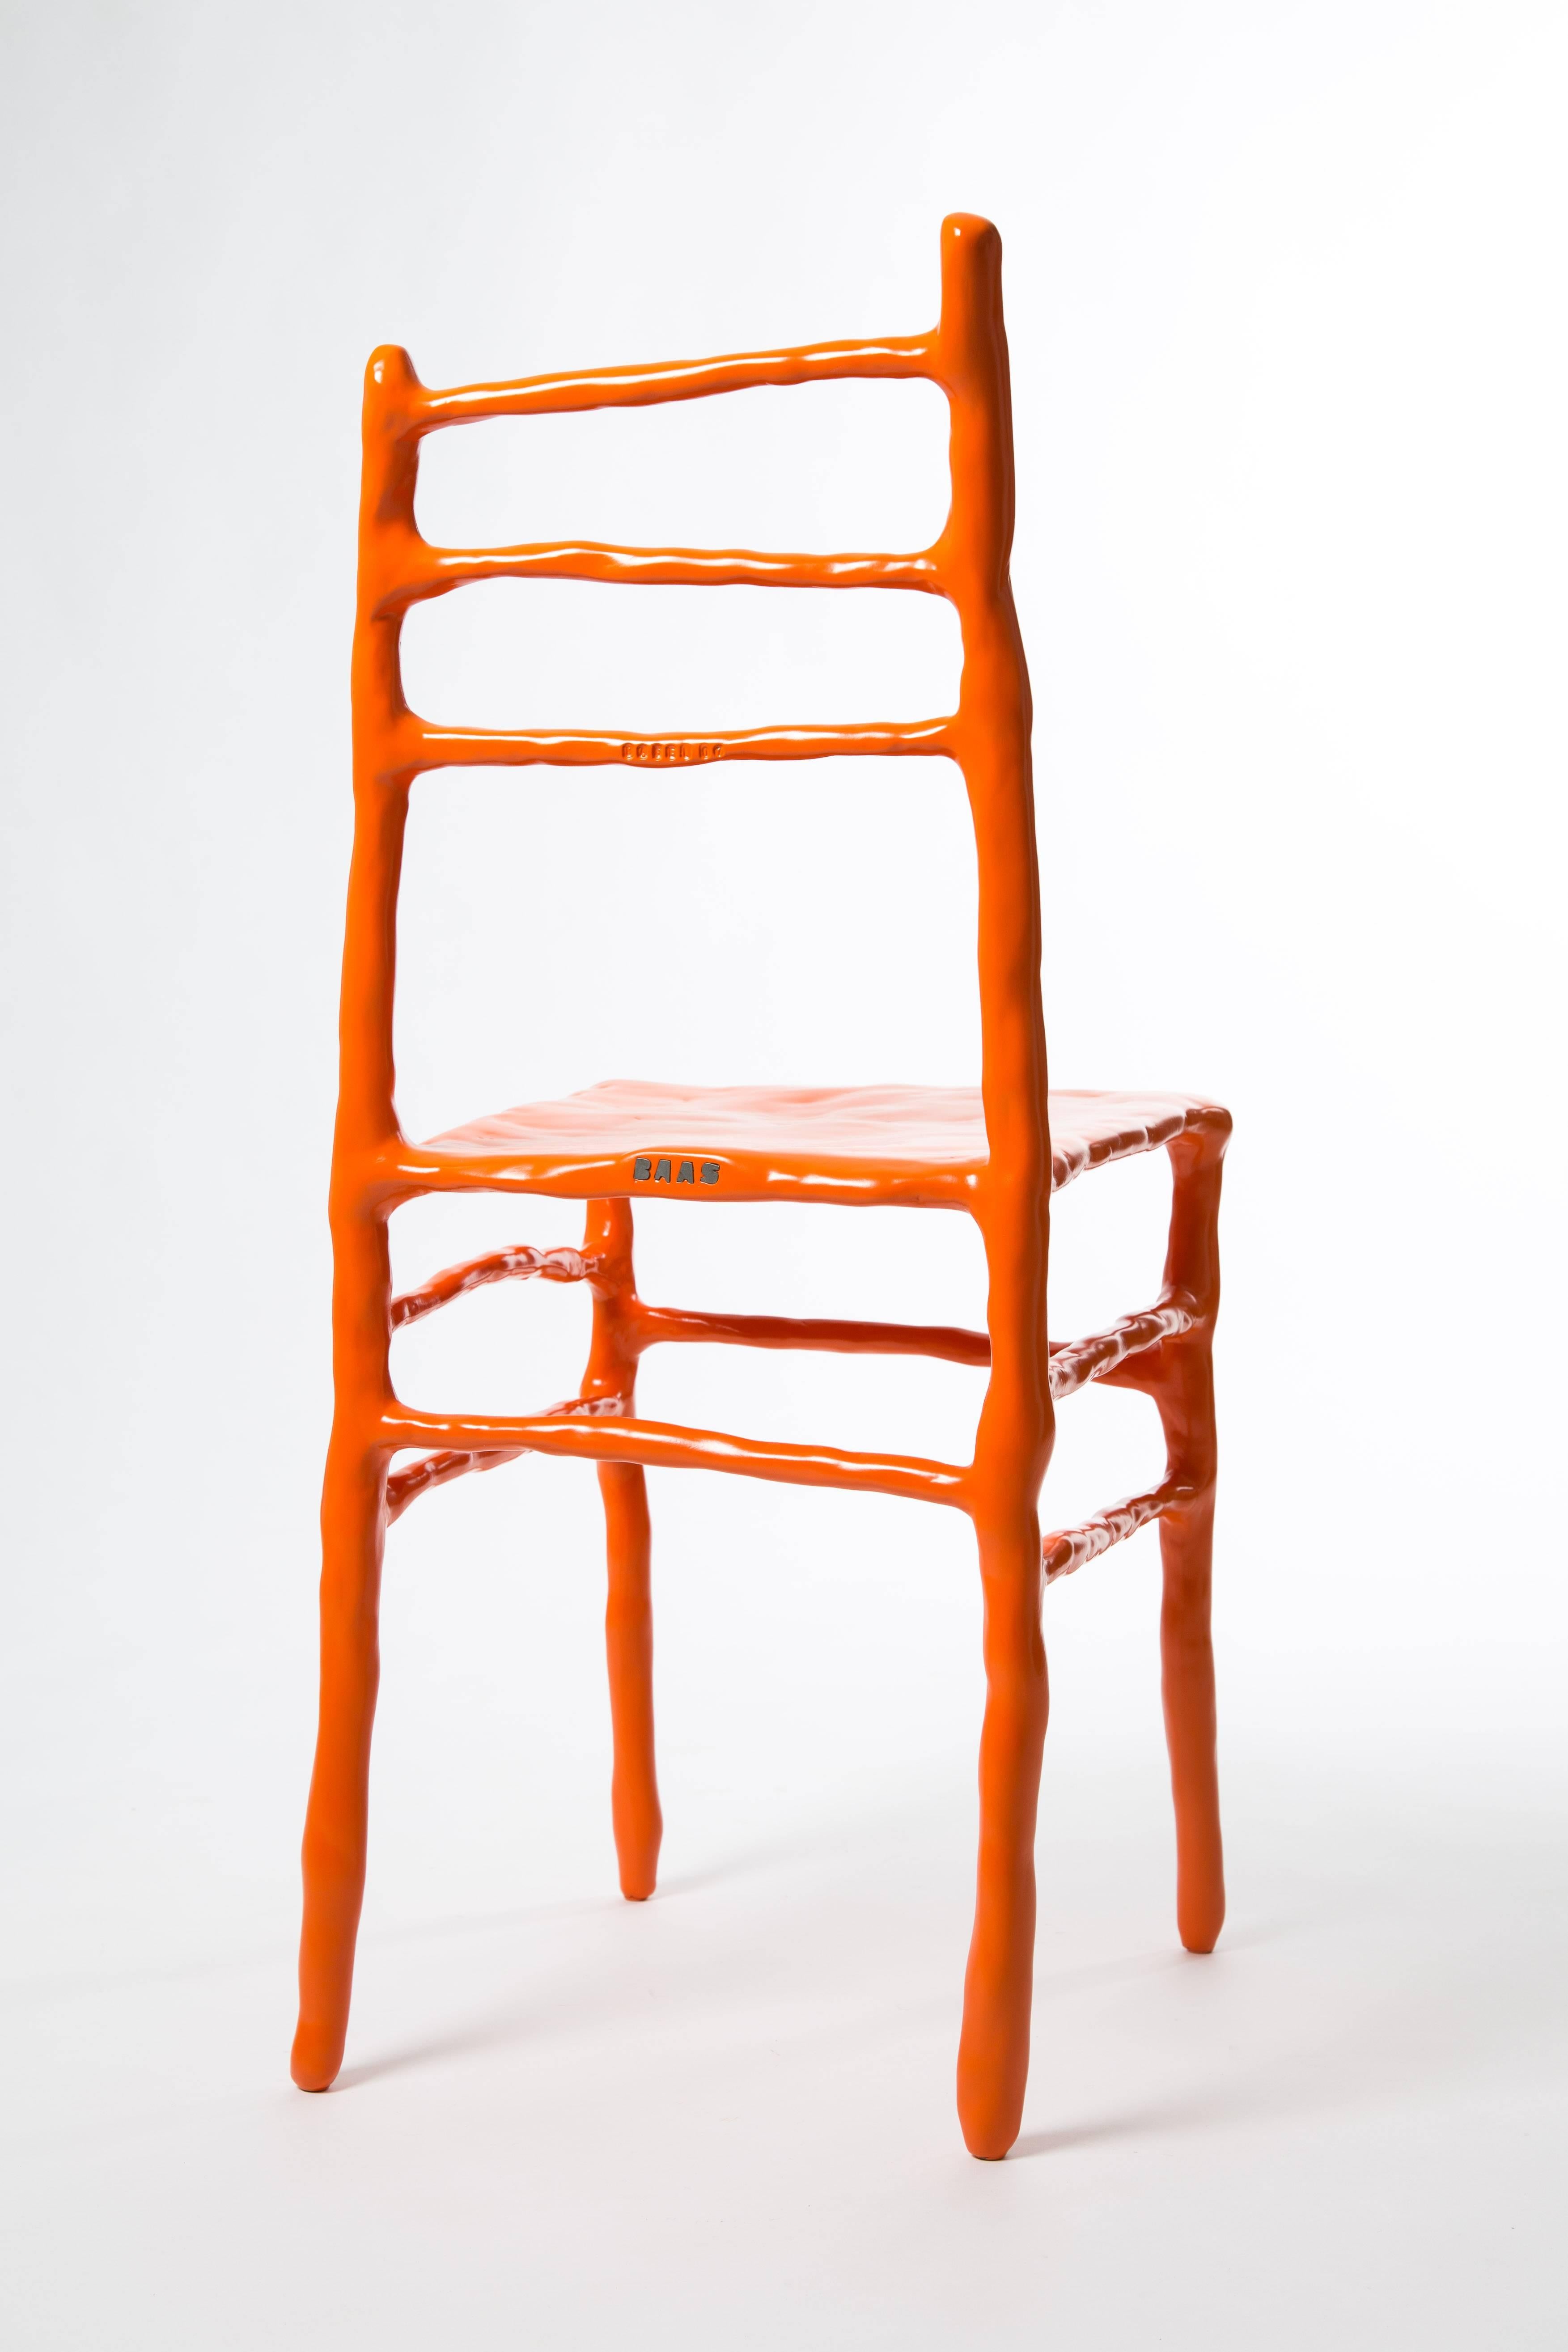 Maarten Baas Clay Chair Limited Edition Basel Chair 2007 Orange For Sale 1